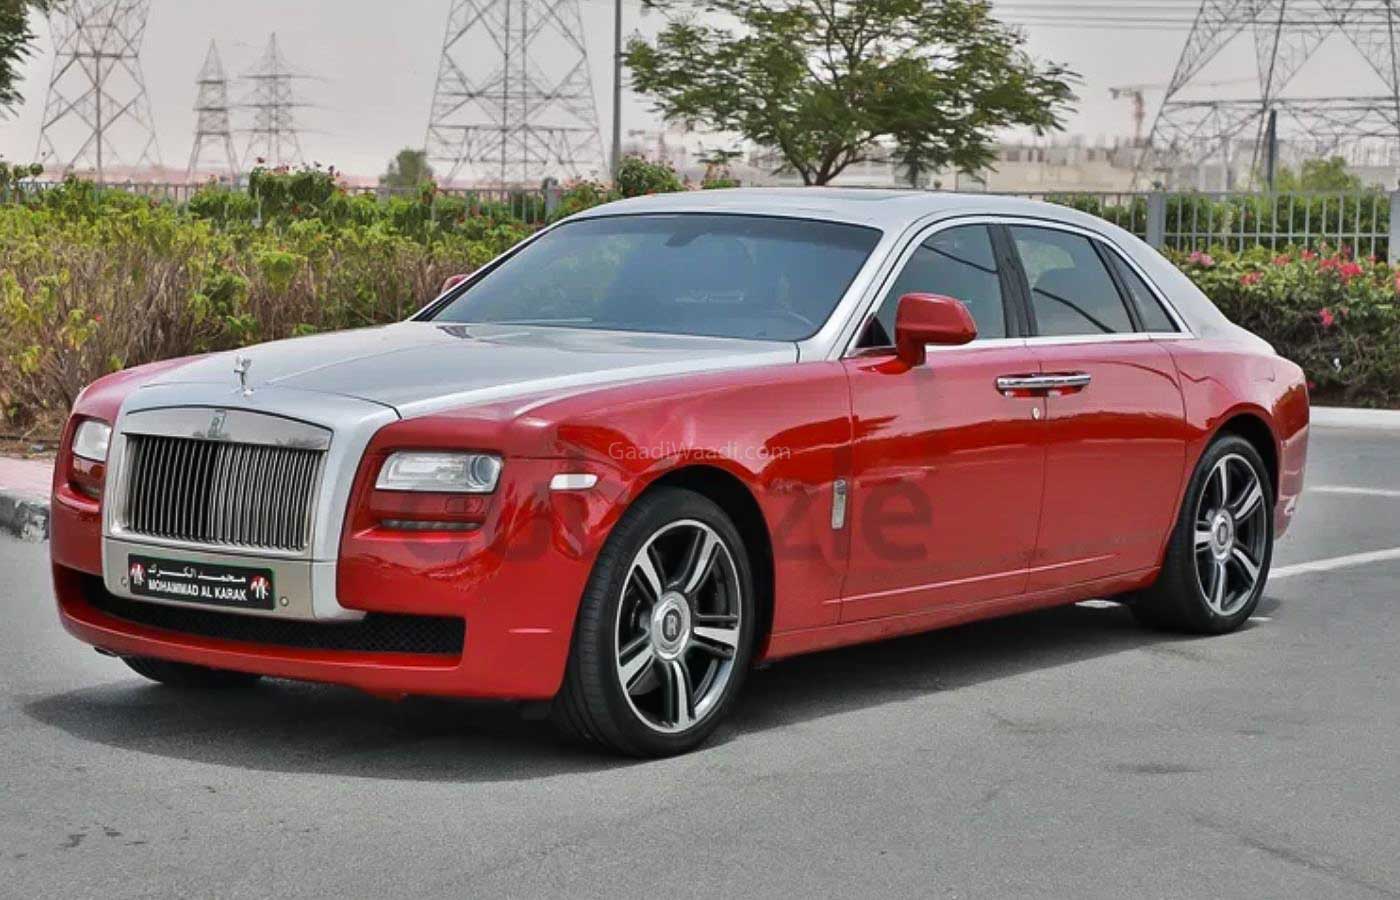 ABANDONED Rolls Royce cars and SUVs of Dubai